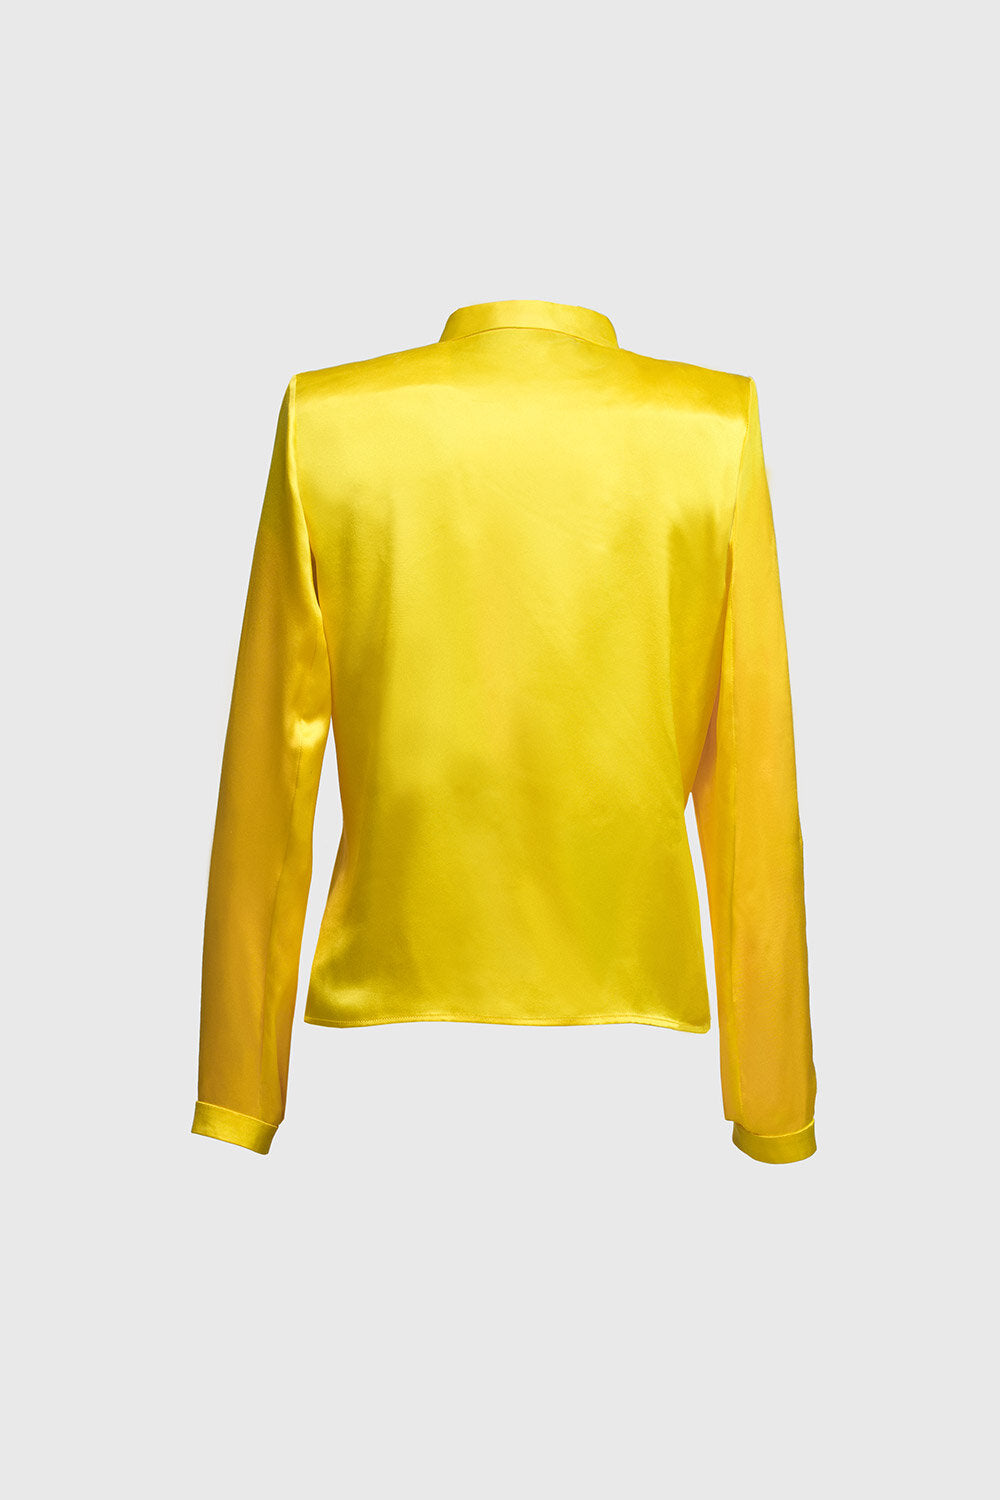 Ant Shirt - Lemon Yellow